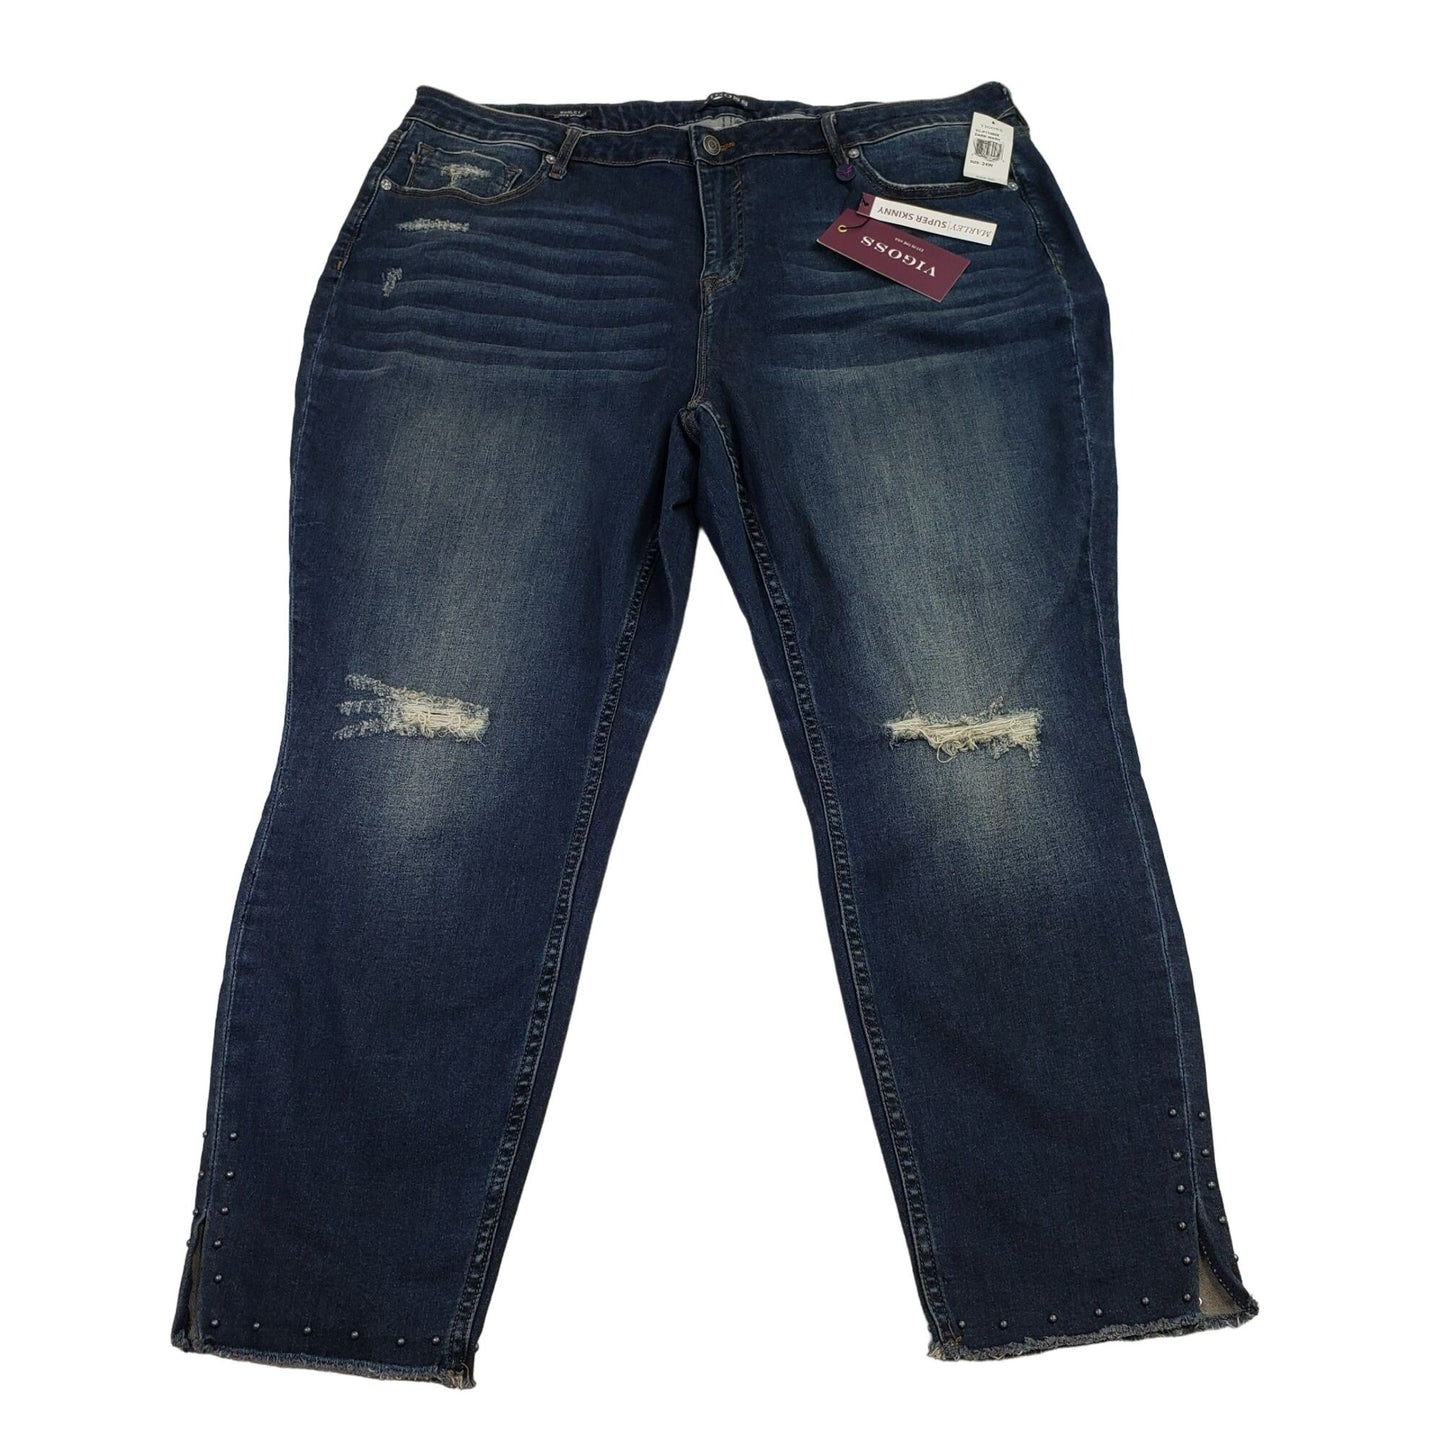 NWT Vigoss Marley Super Skinny Embellished Jeans Size 24W